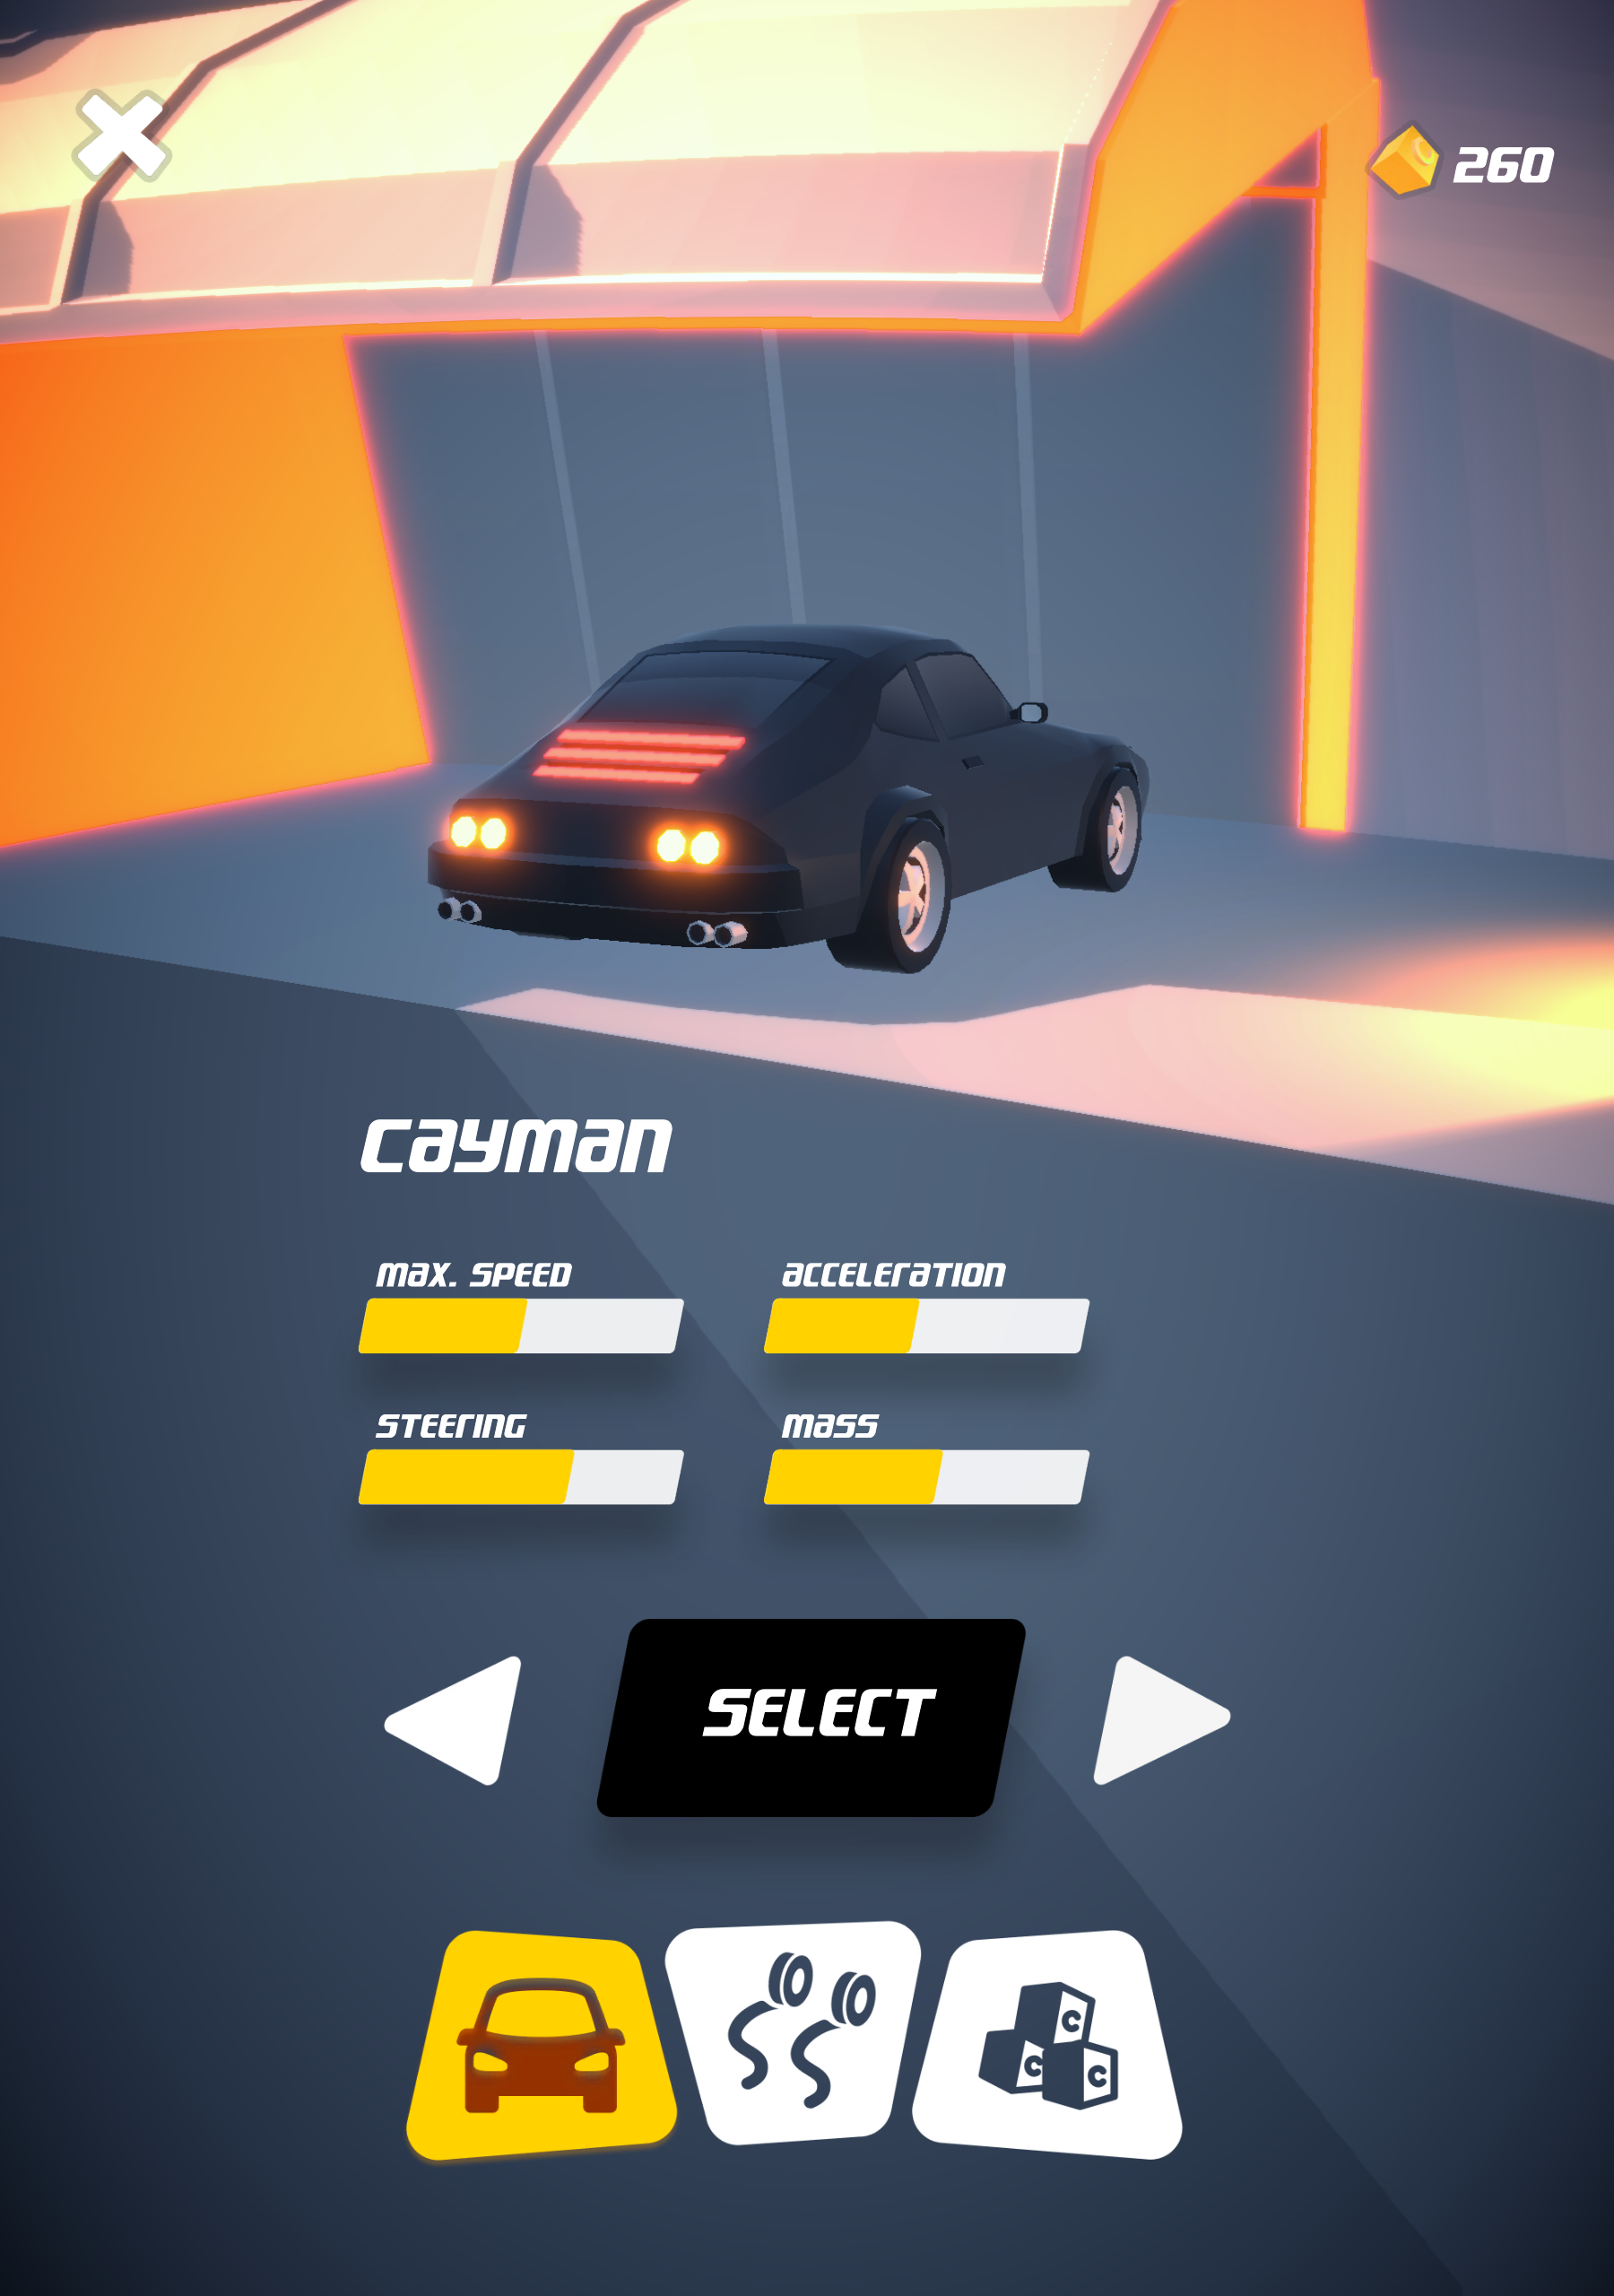 Screenshot of Sunset Driver